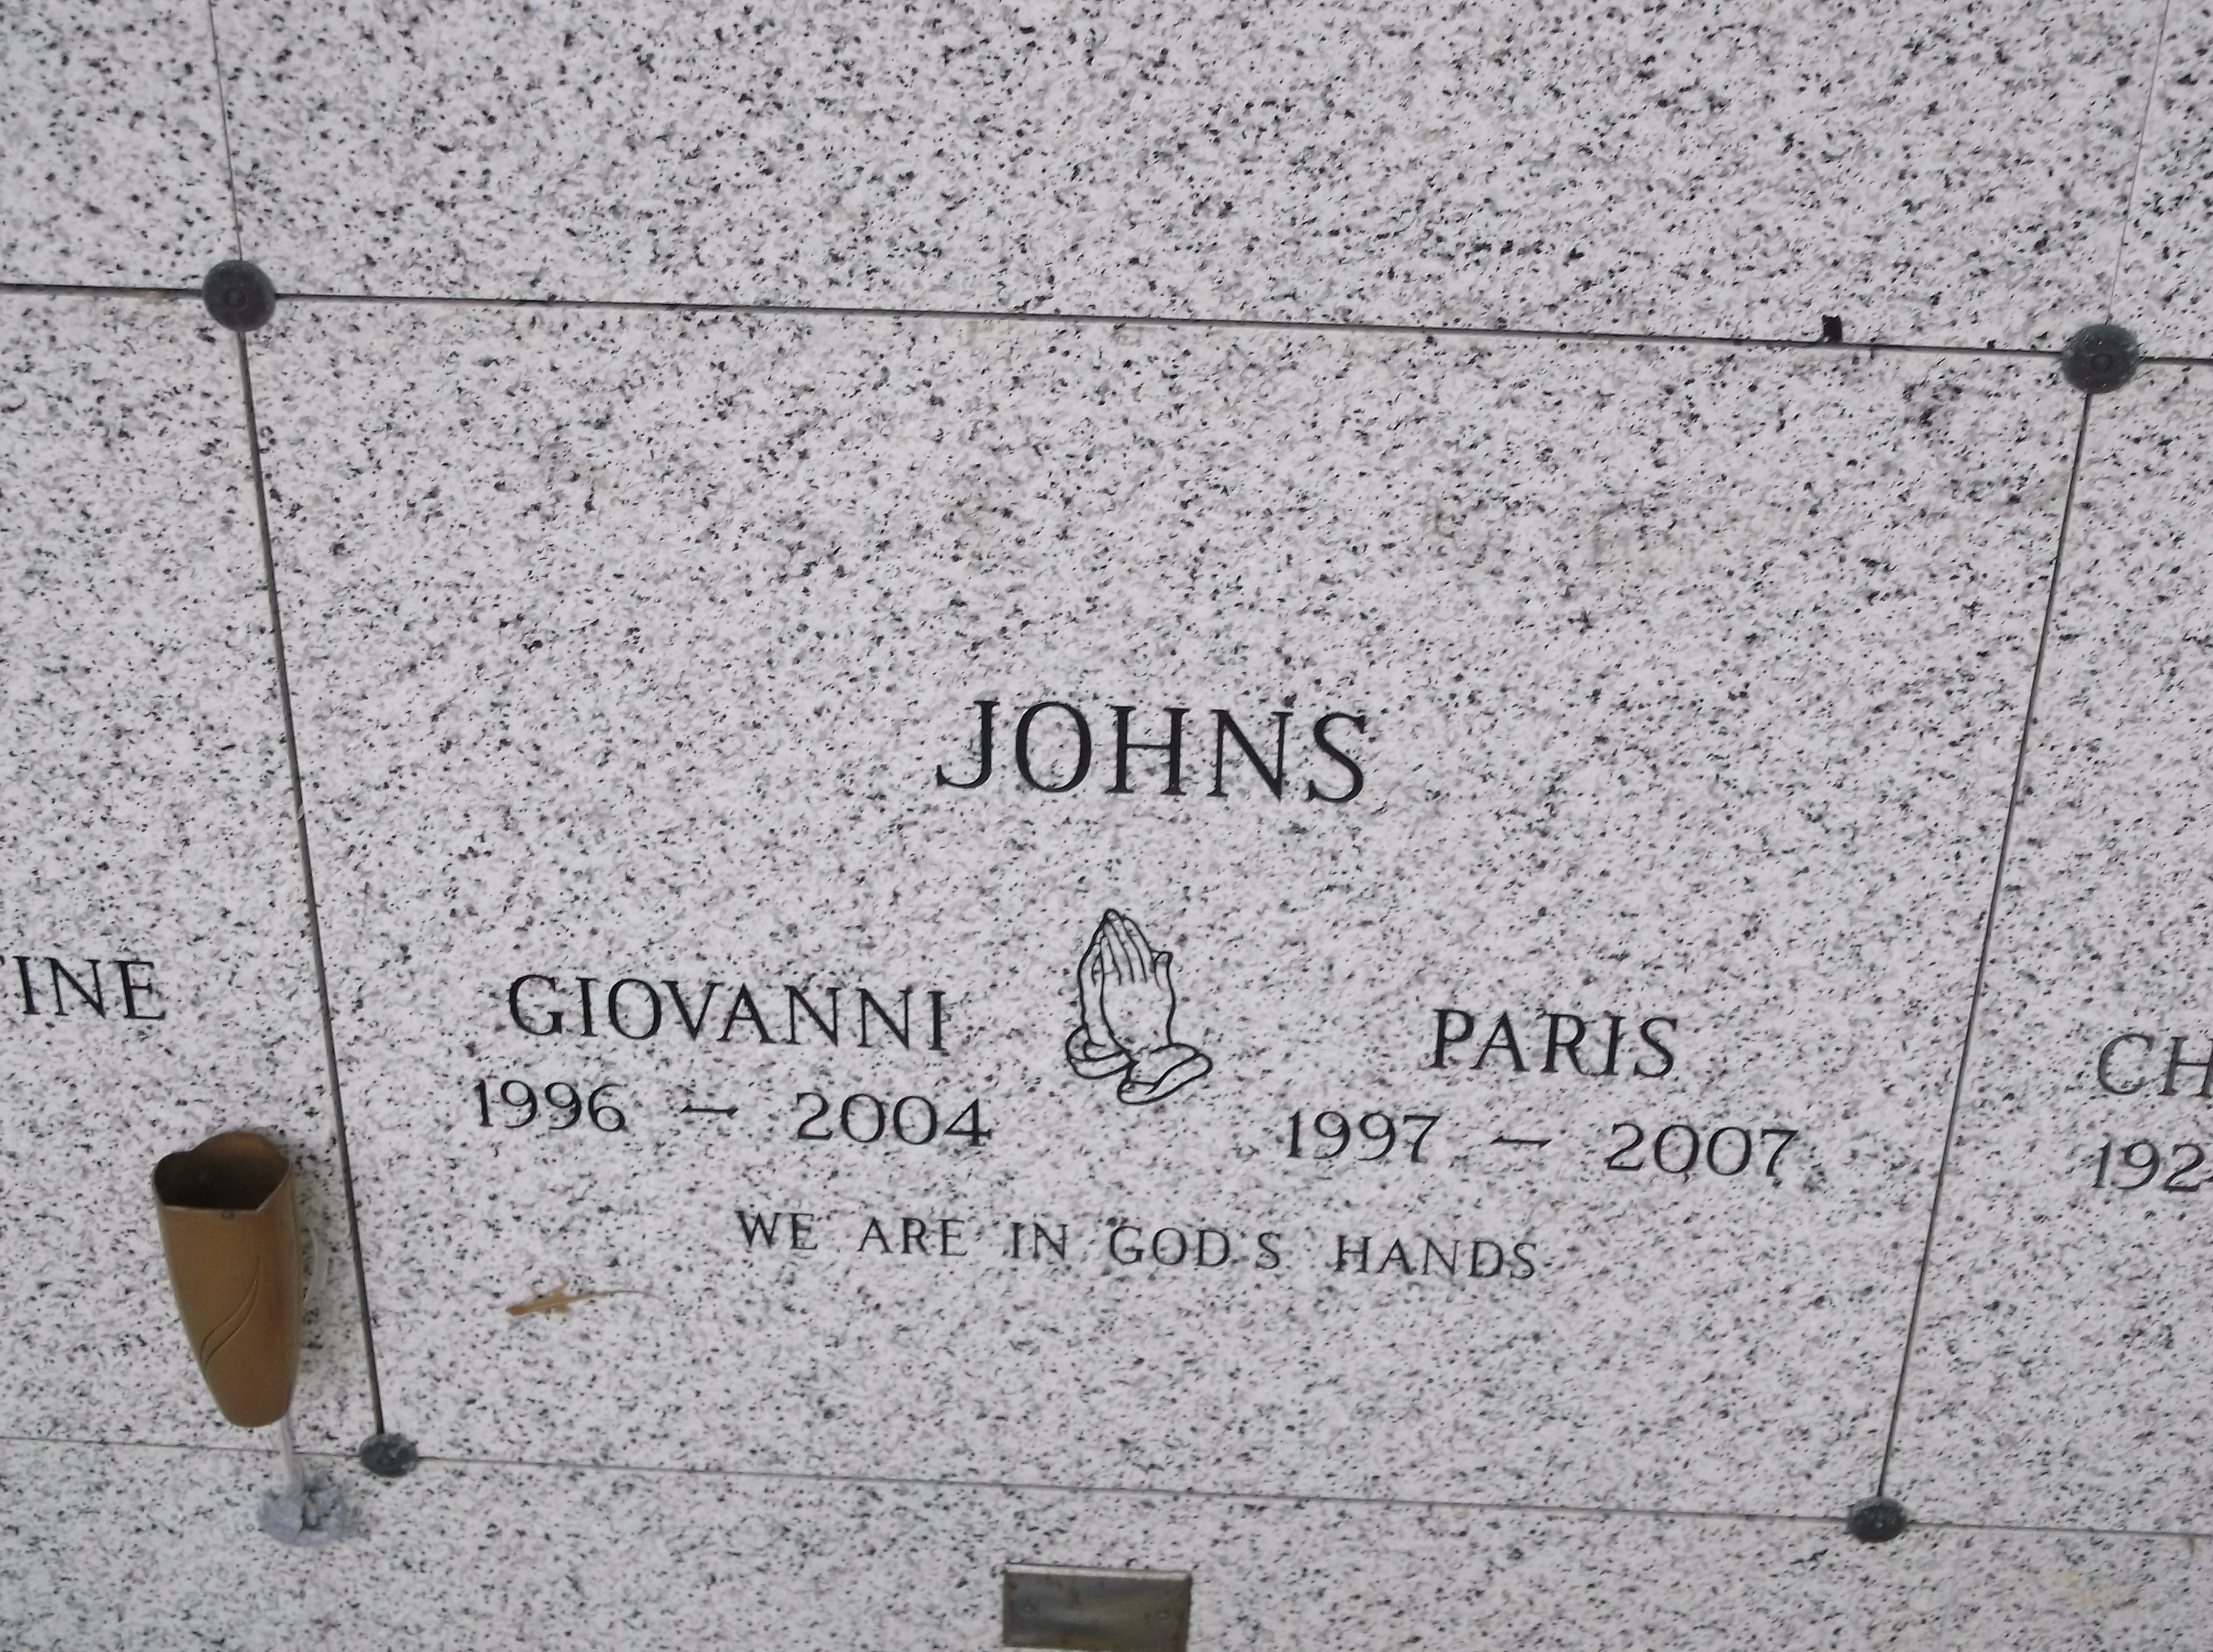 Giovanni Johns